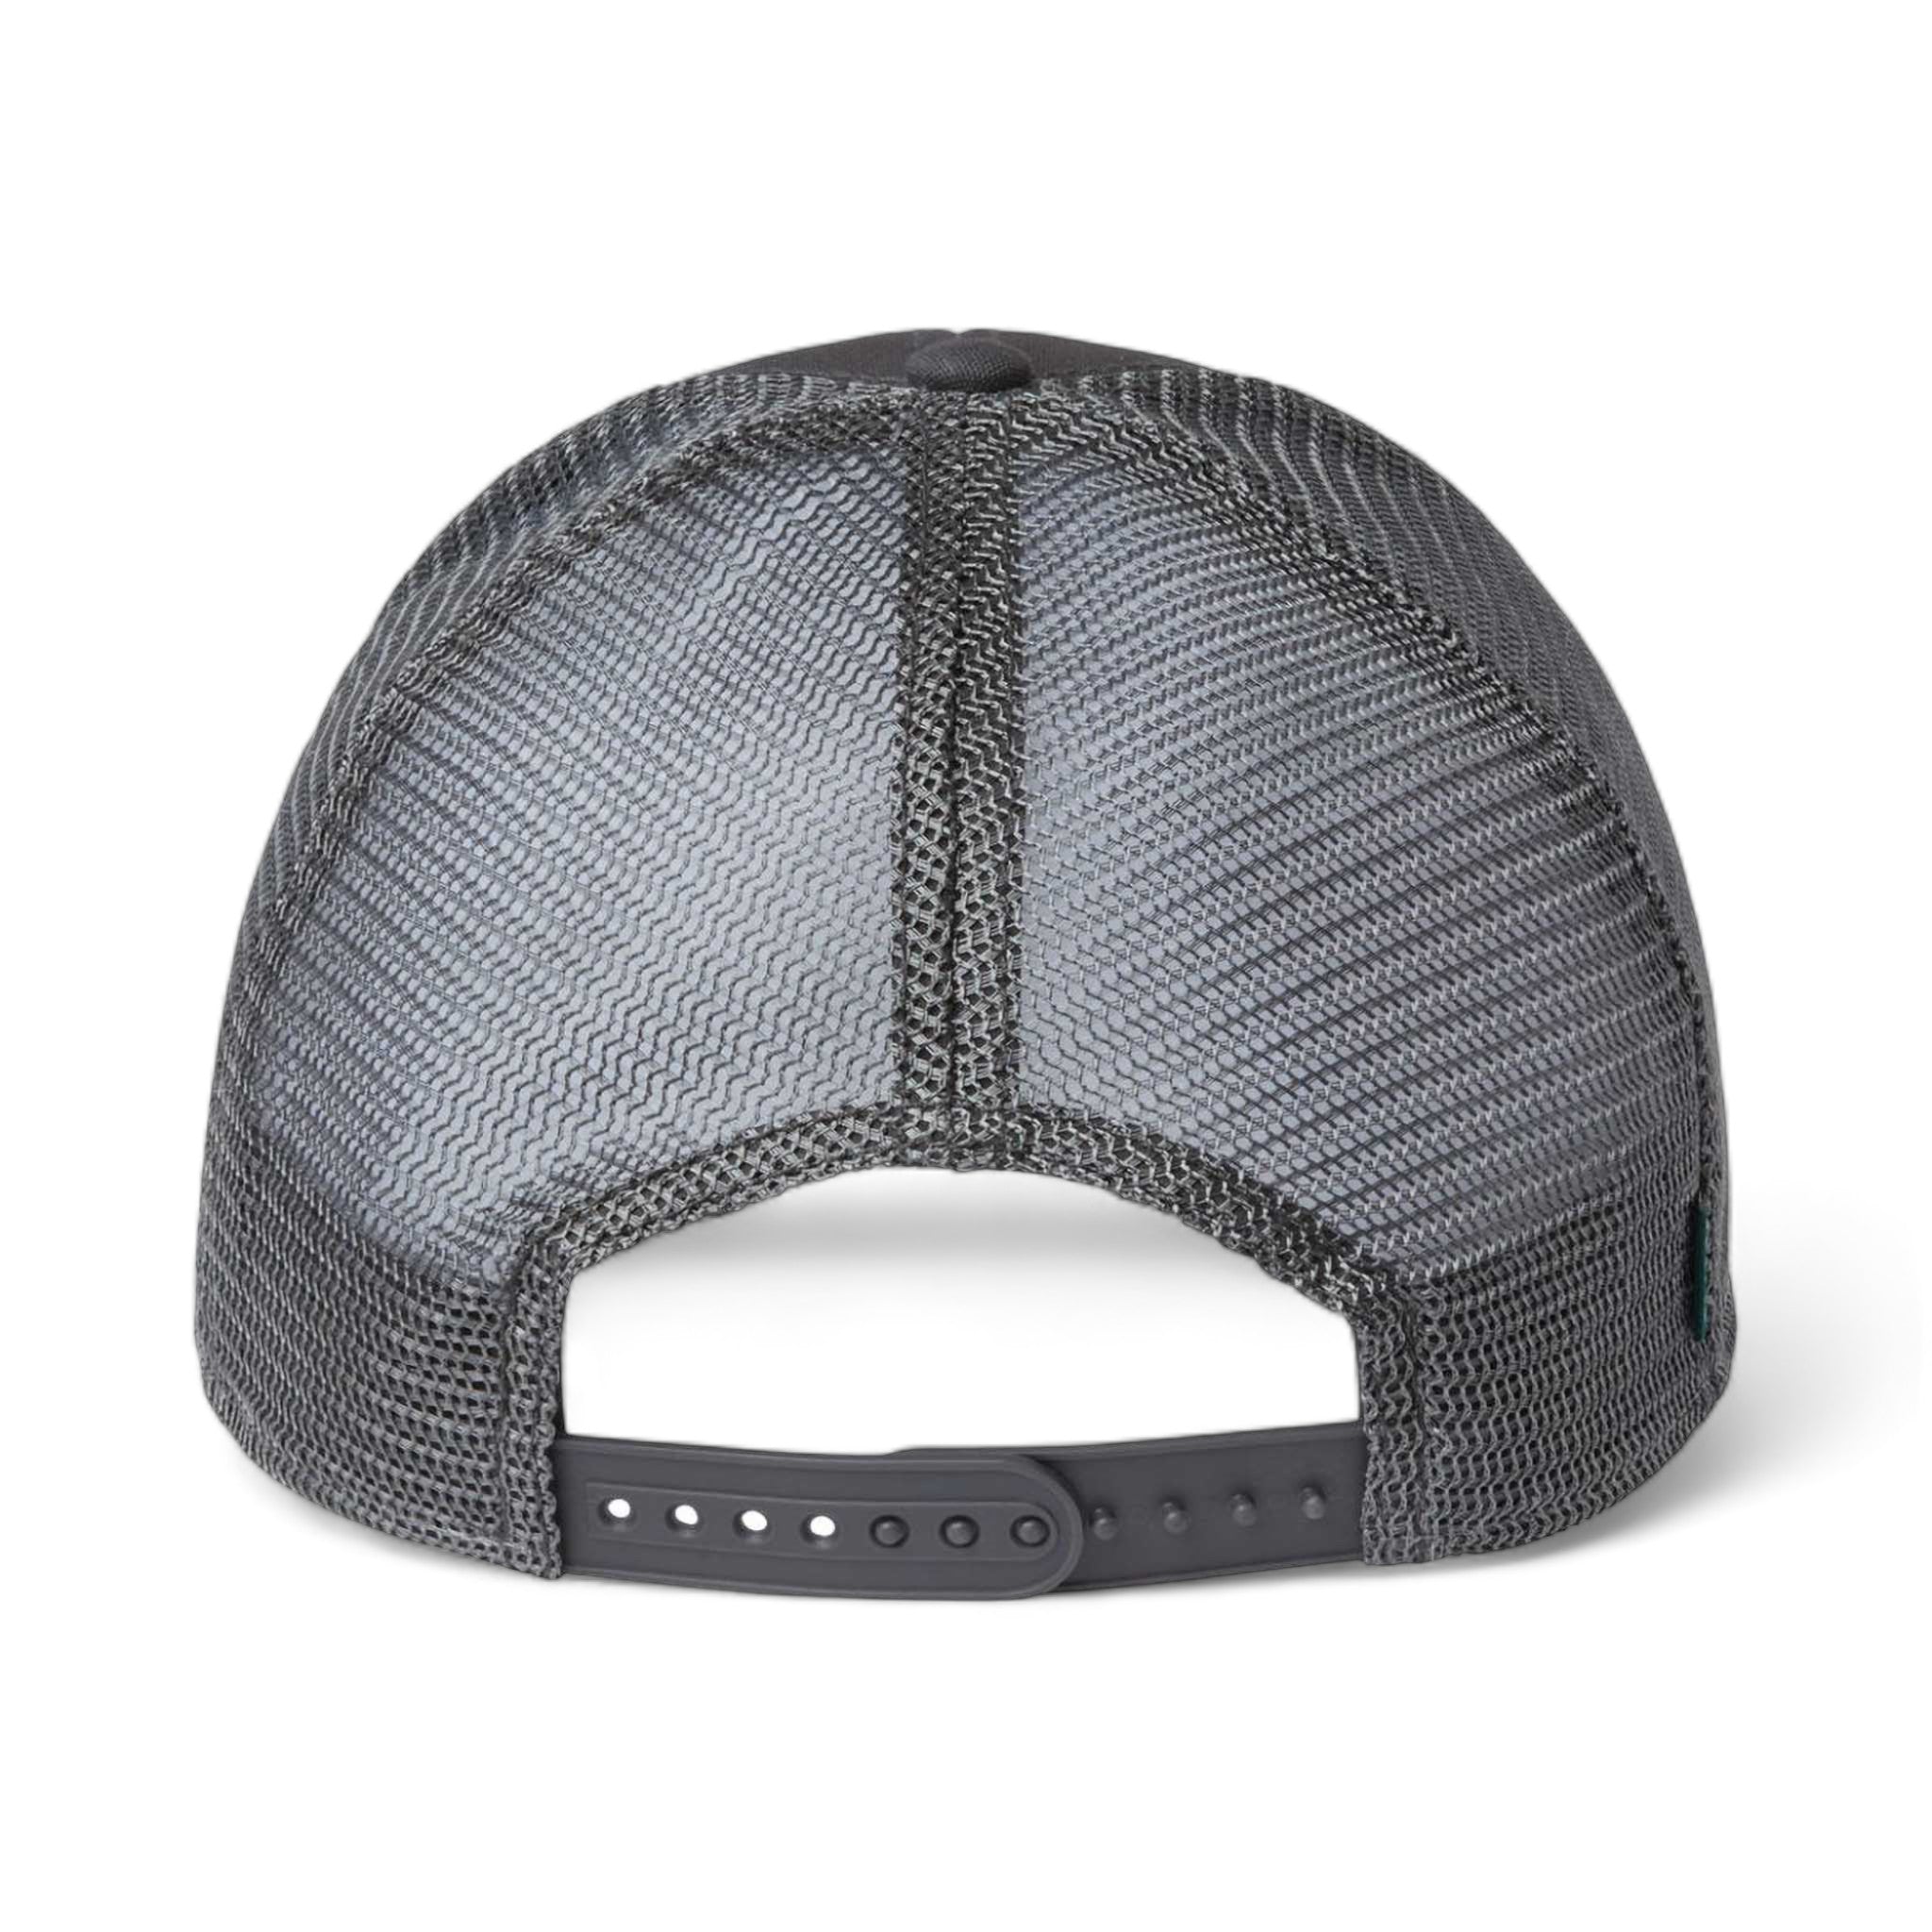 Back view of LEGACY LPS custom hat in dark grey and dark grey